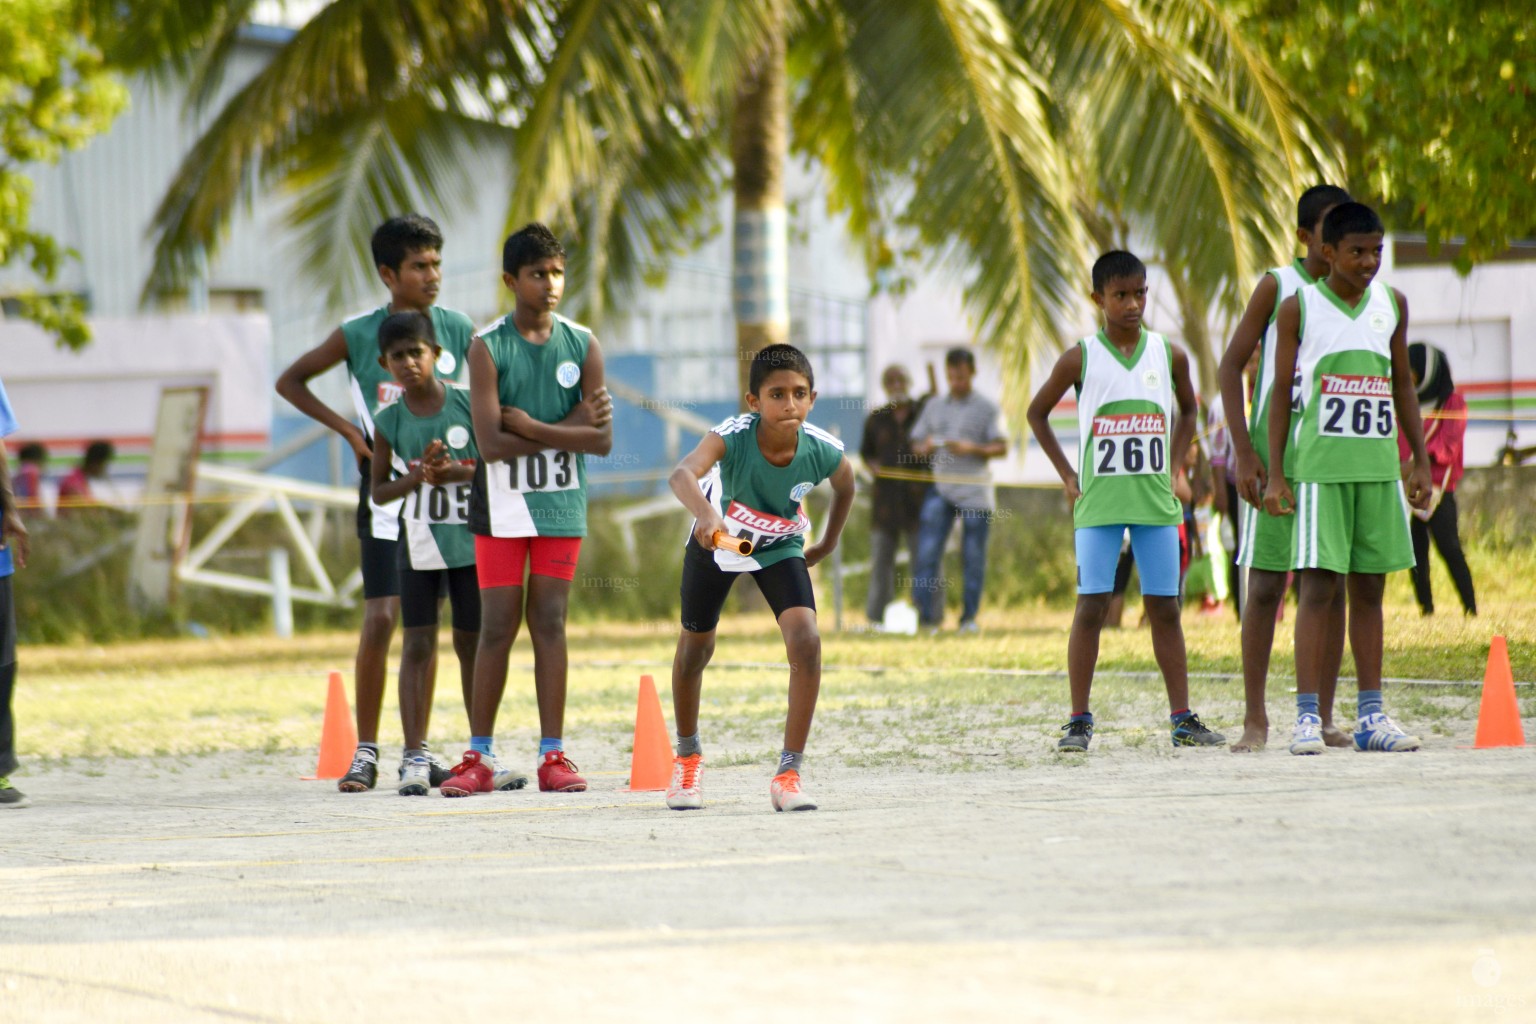 Day 4 of the Nakita Interschool Junior Championship in Kulhudhuffushi', Maldives, Thursday, March. 24, 2016. (Images.mv Photo/Jaufar Ali).